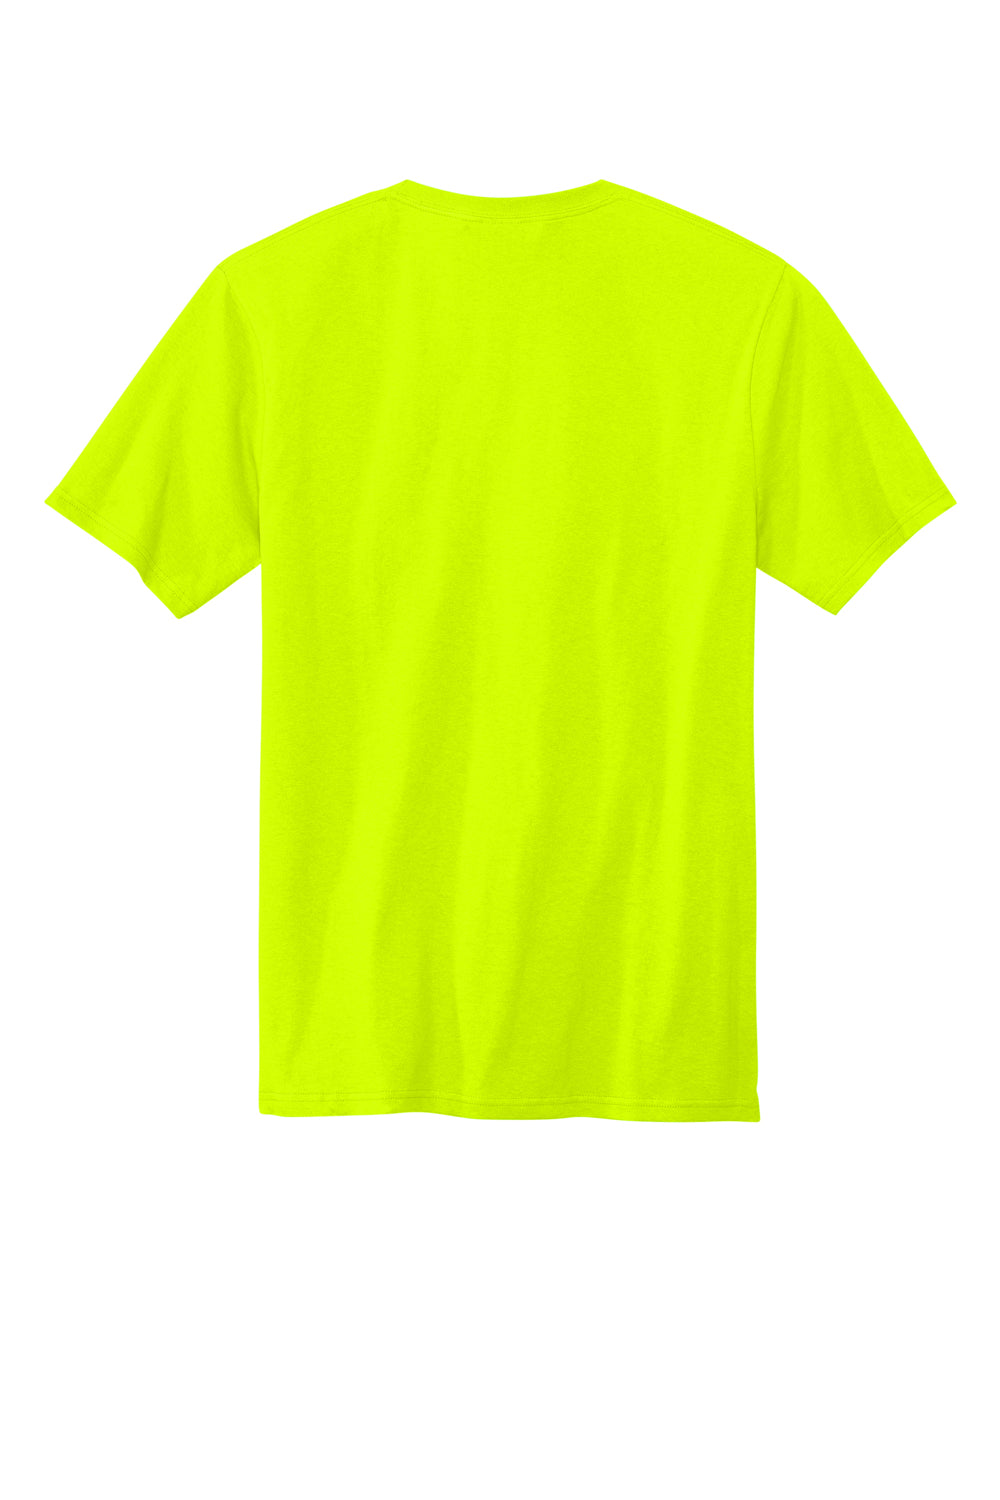 Volunteer Knitwear VL100P USA Made All American Short Sleeve Crewneck T-Shirt w/ Pocket Safety Green Flat Back